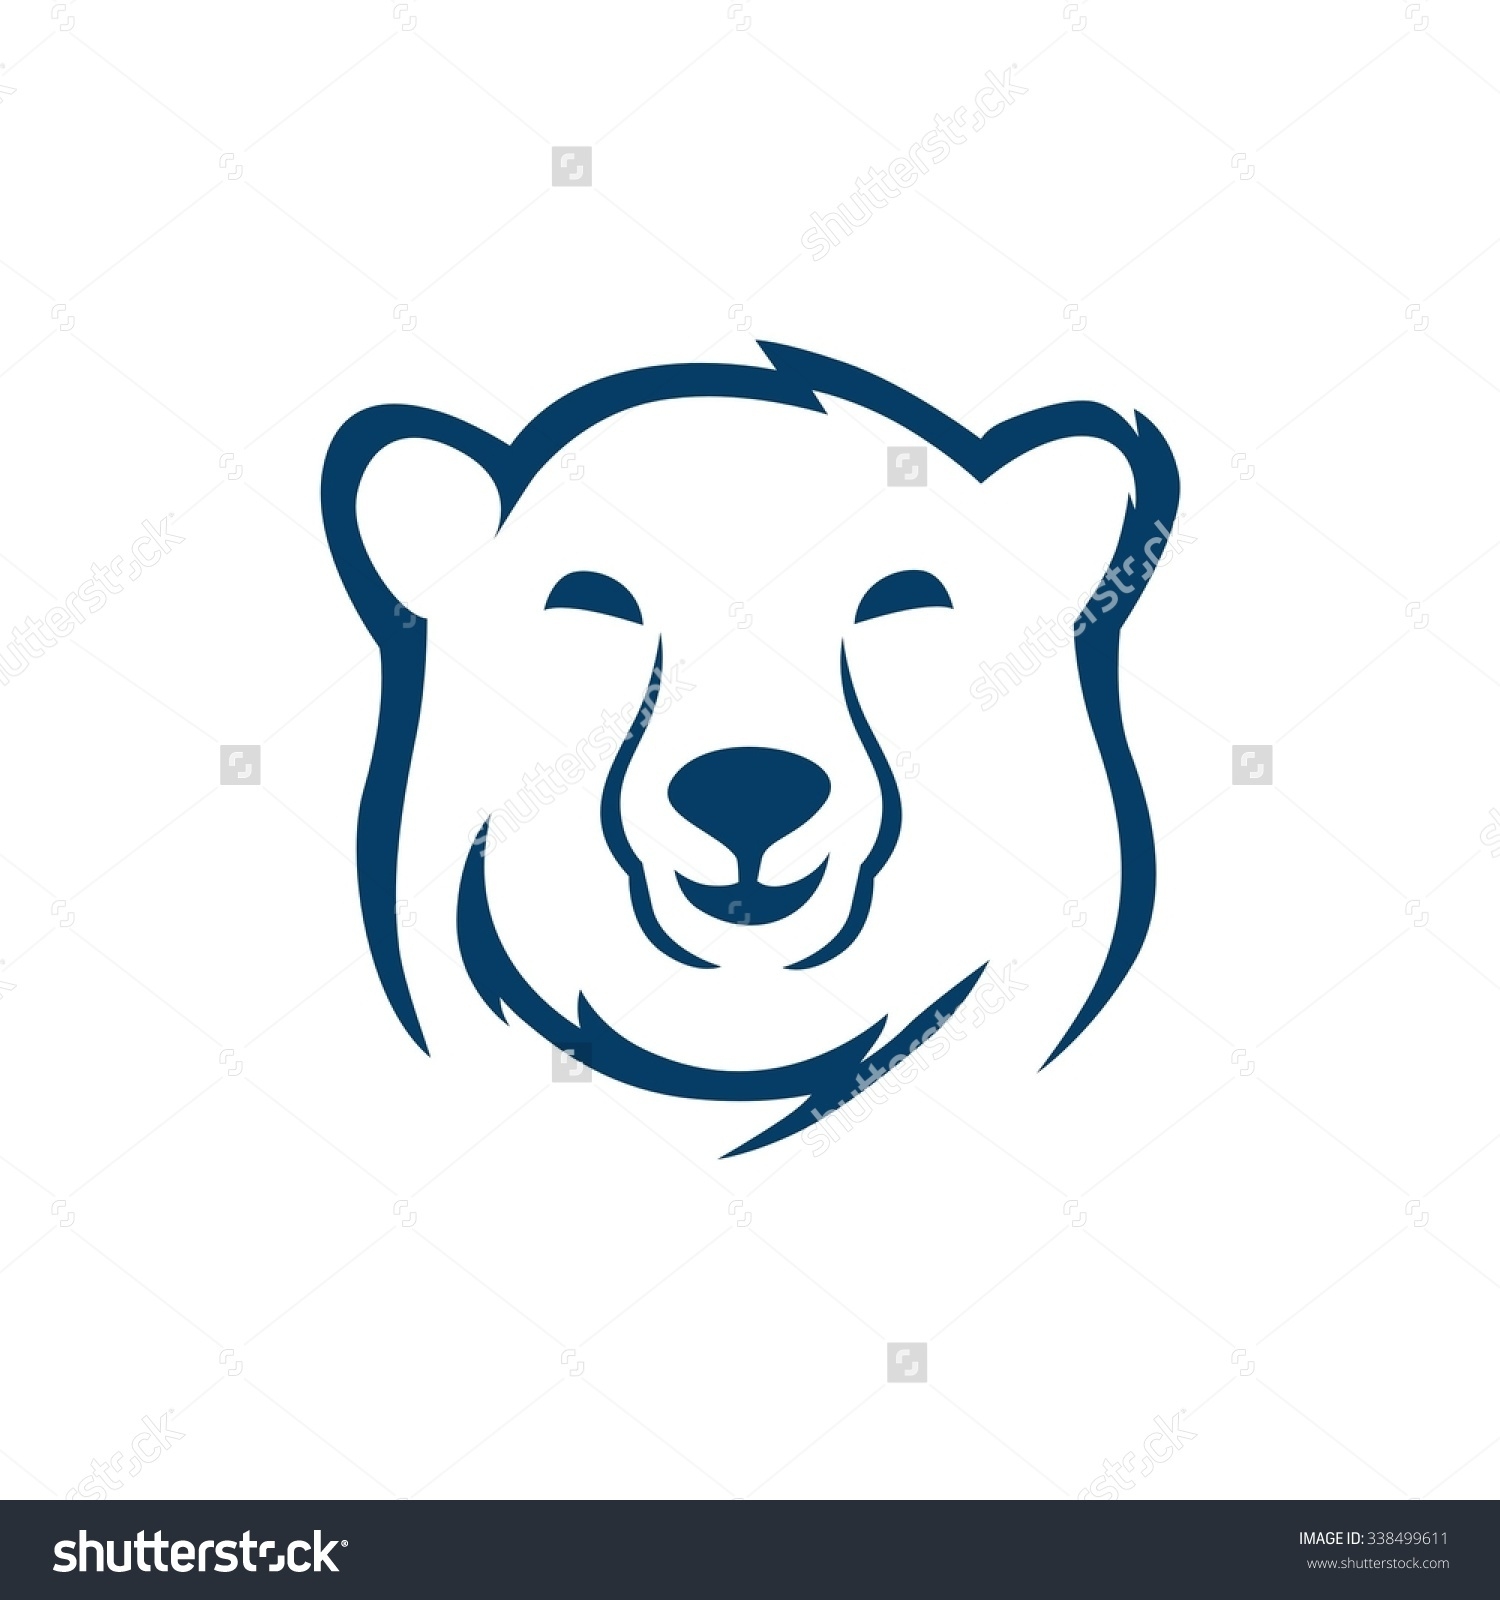 Силуэт головы медведя для логотипа